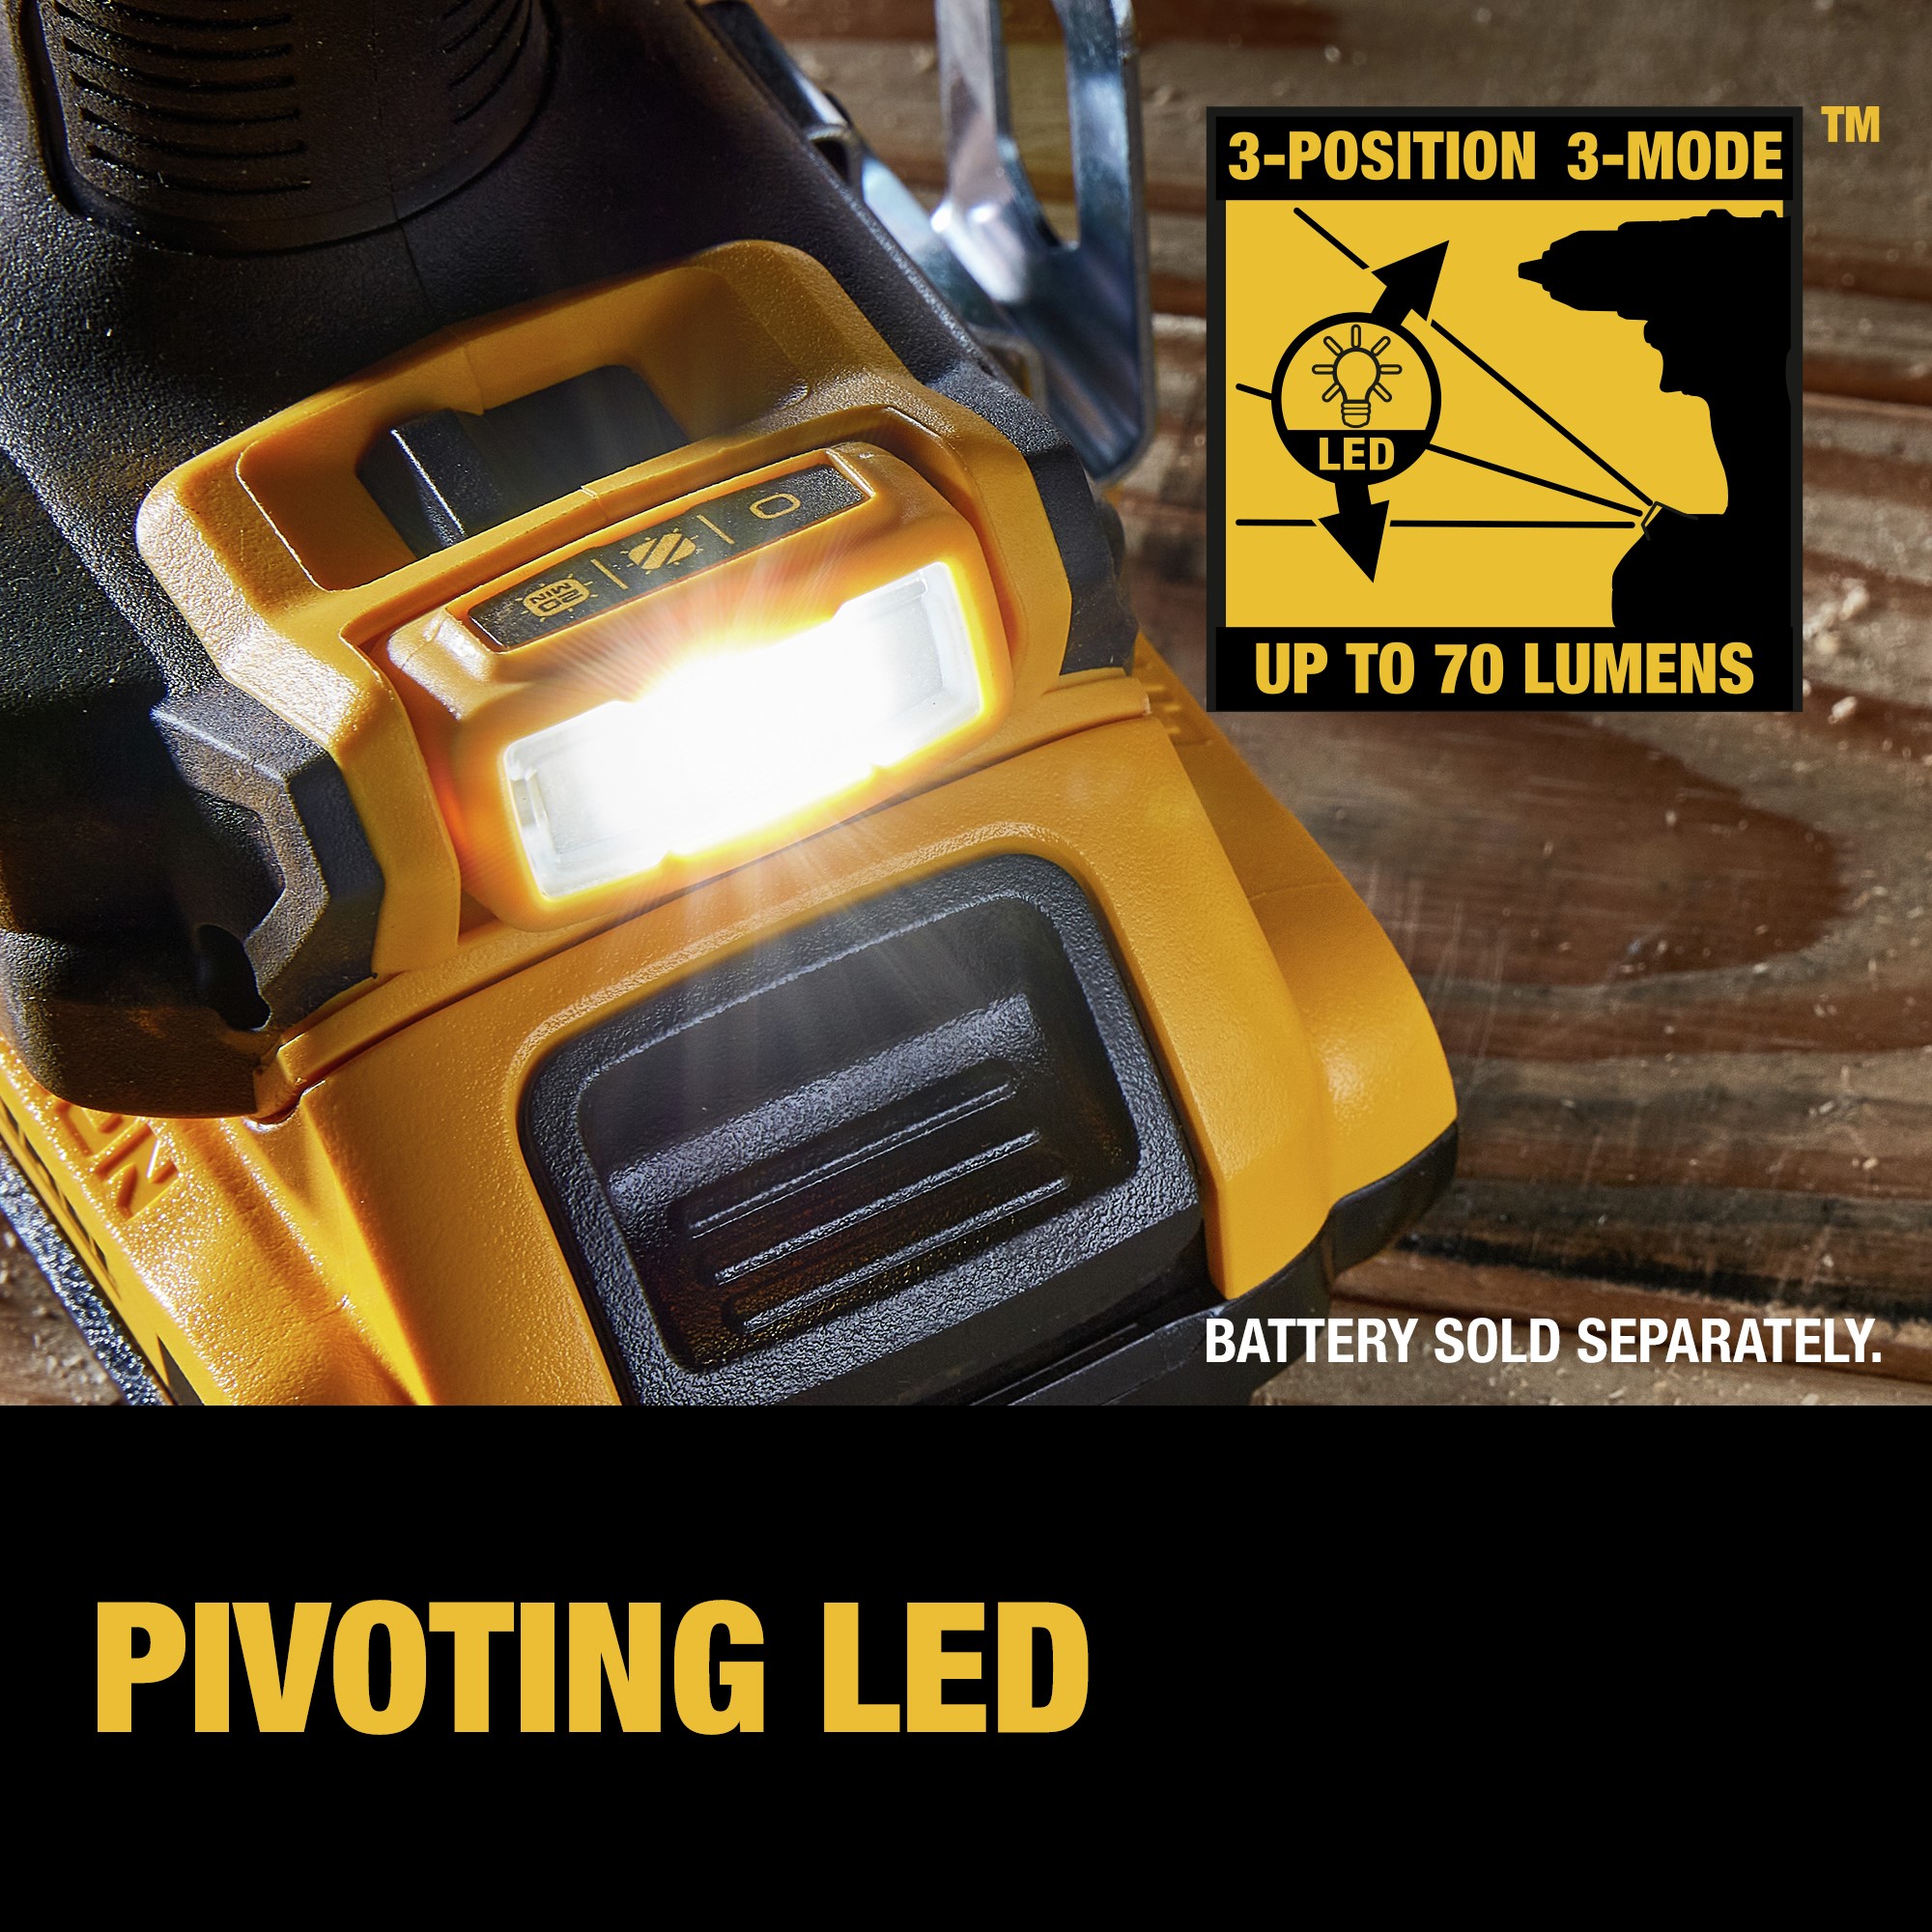 Pivoting LED